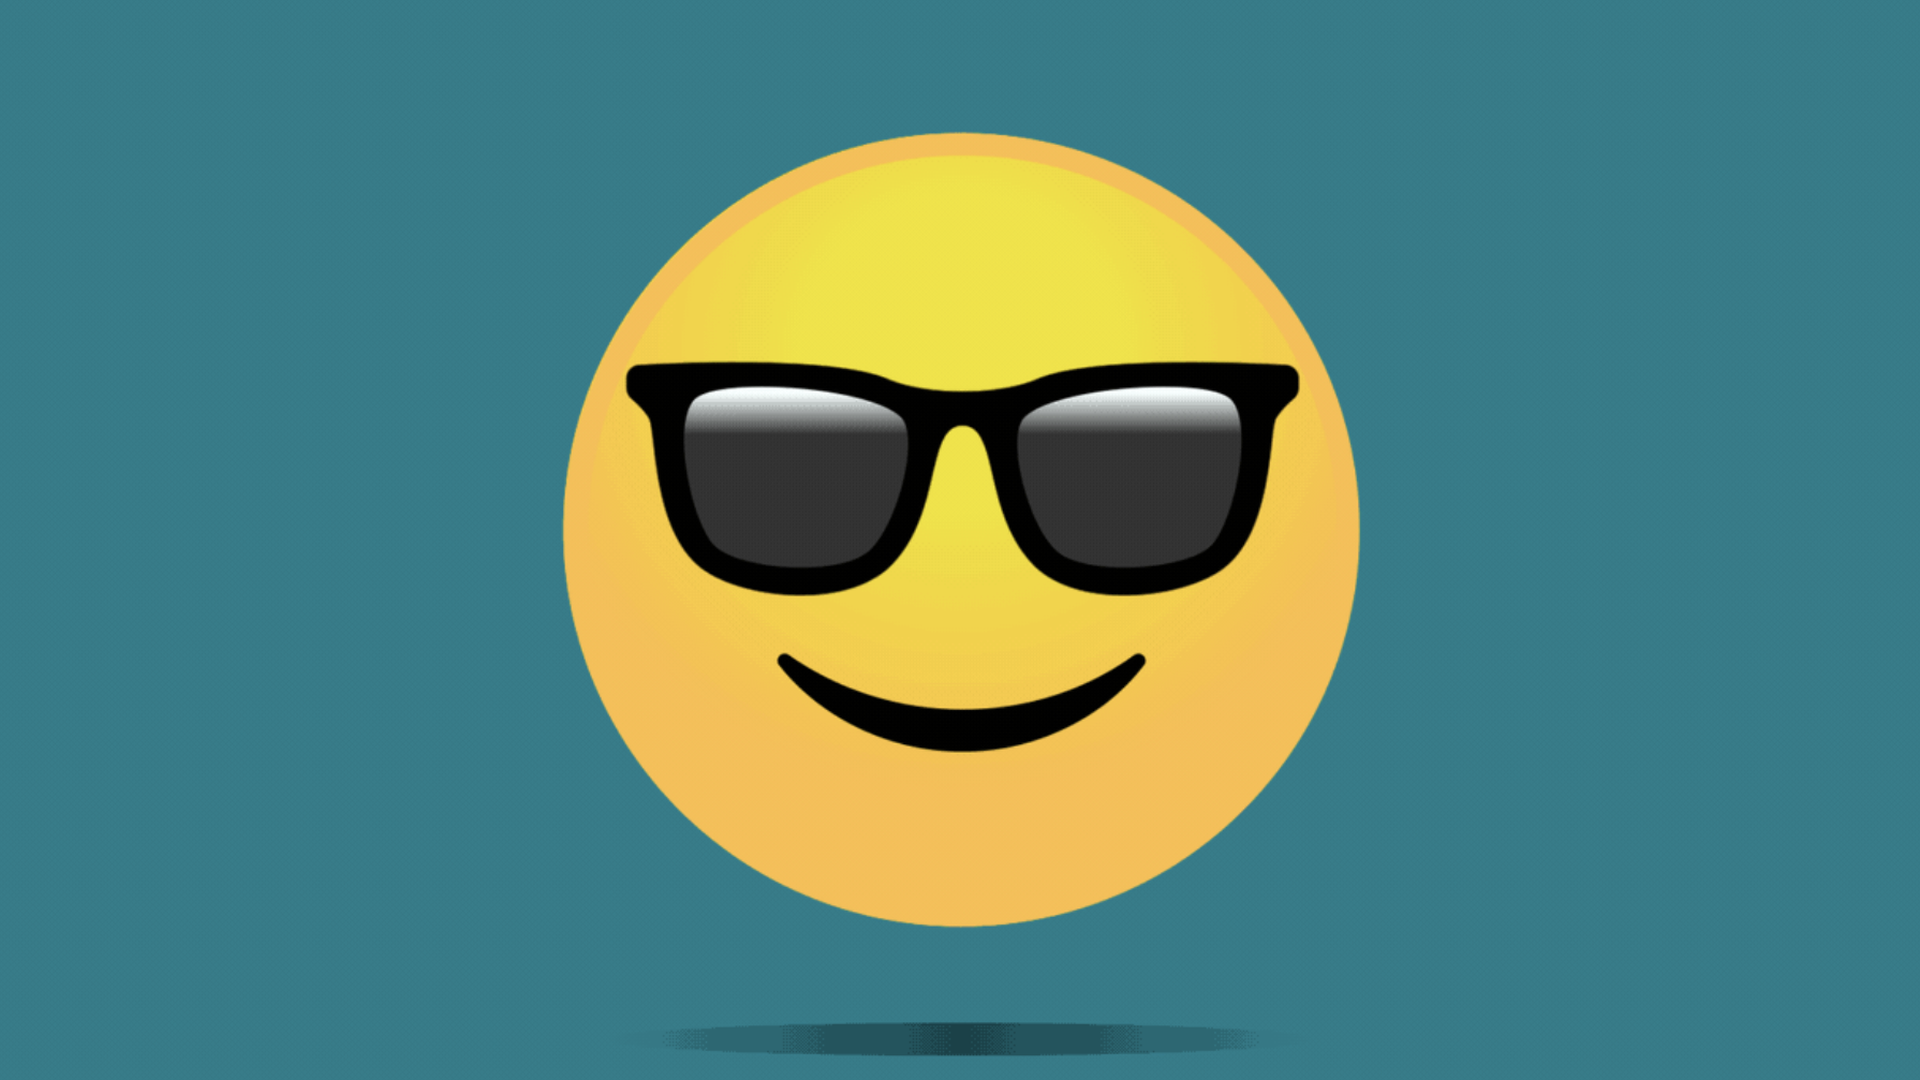 A smile emoji with sunglasses